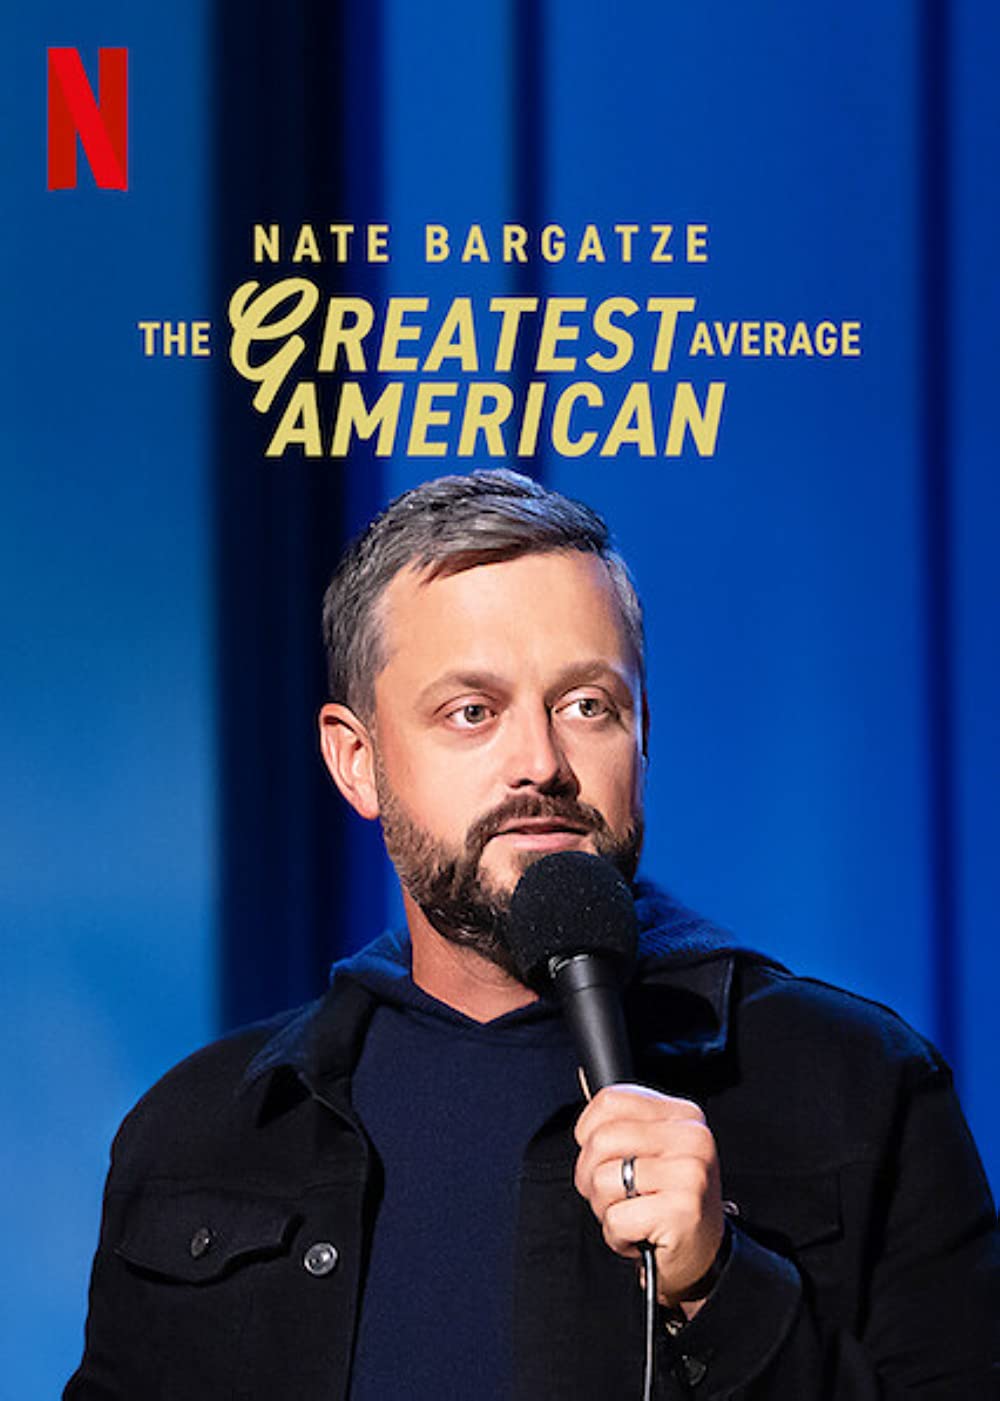 Filmbeschreibung zu Nate Bargatze: The Greatest Average American